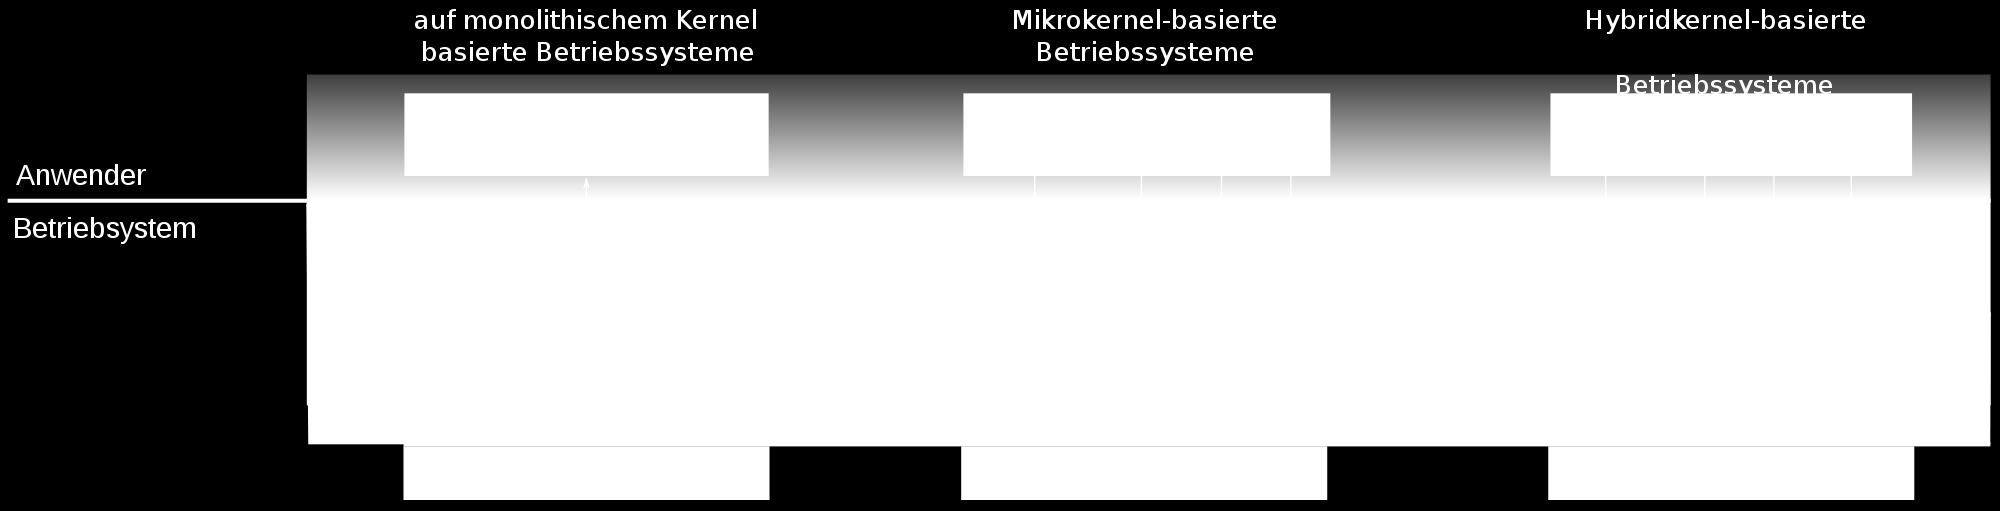 Vergleich Makro/Mikrokernel (Wikipedia 2009,